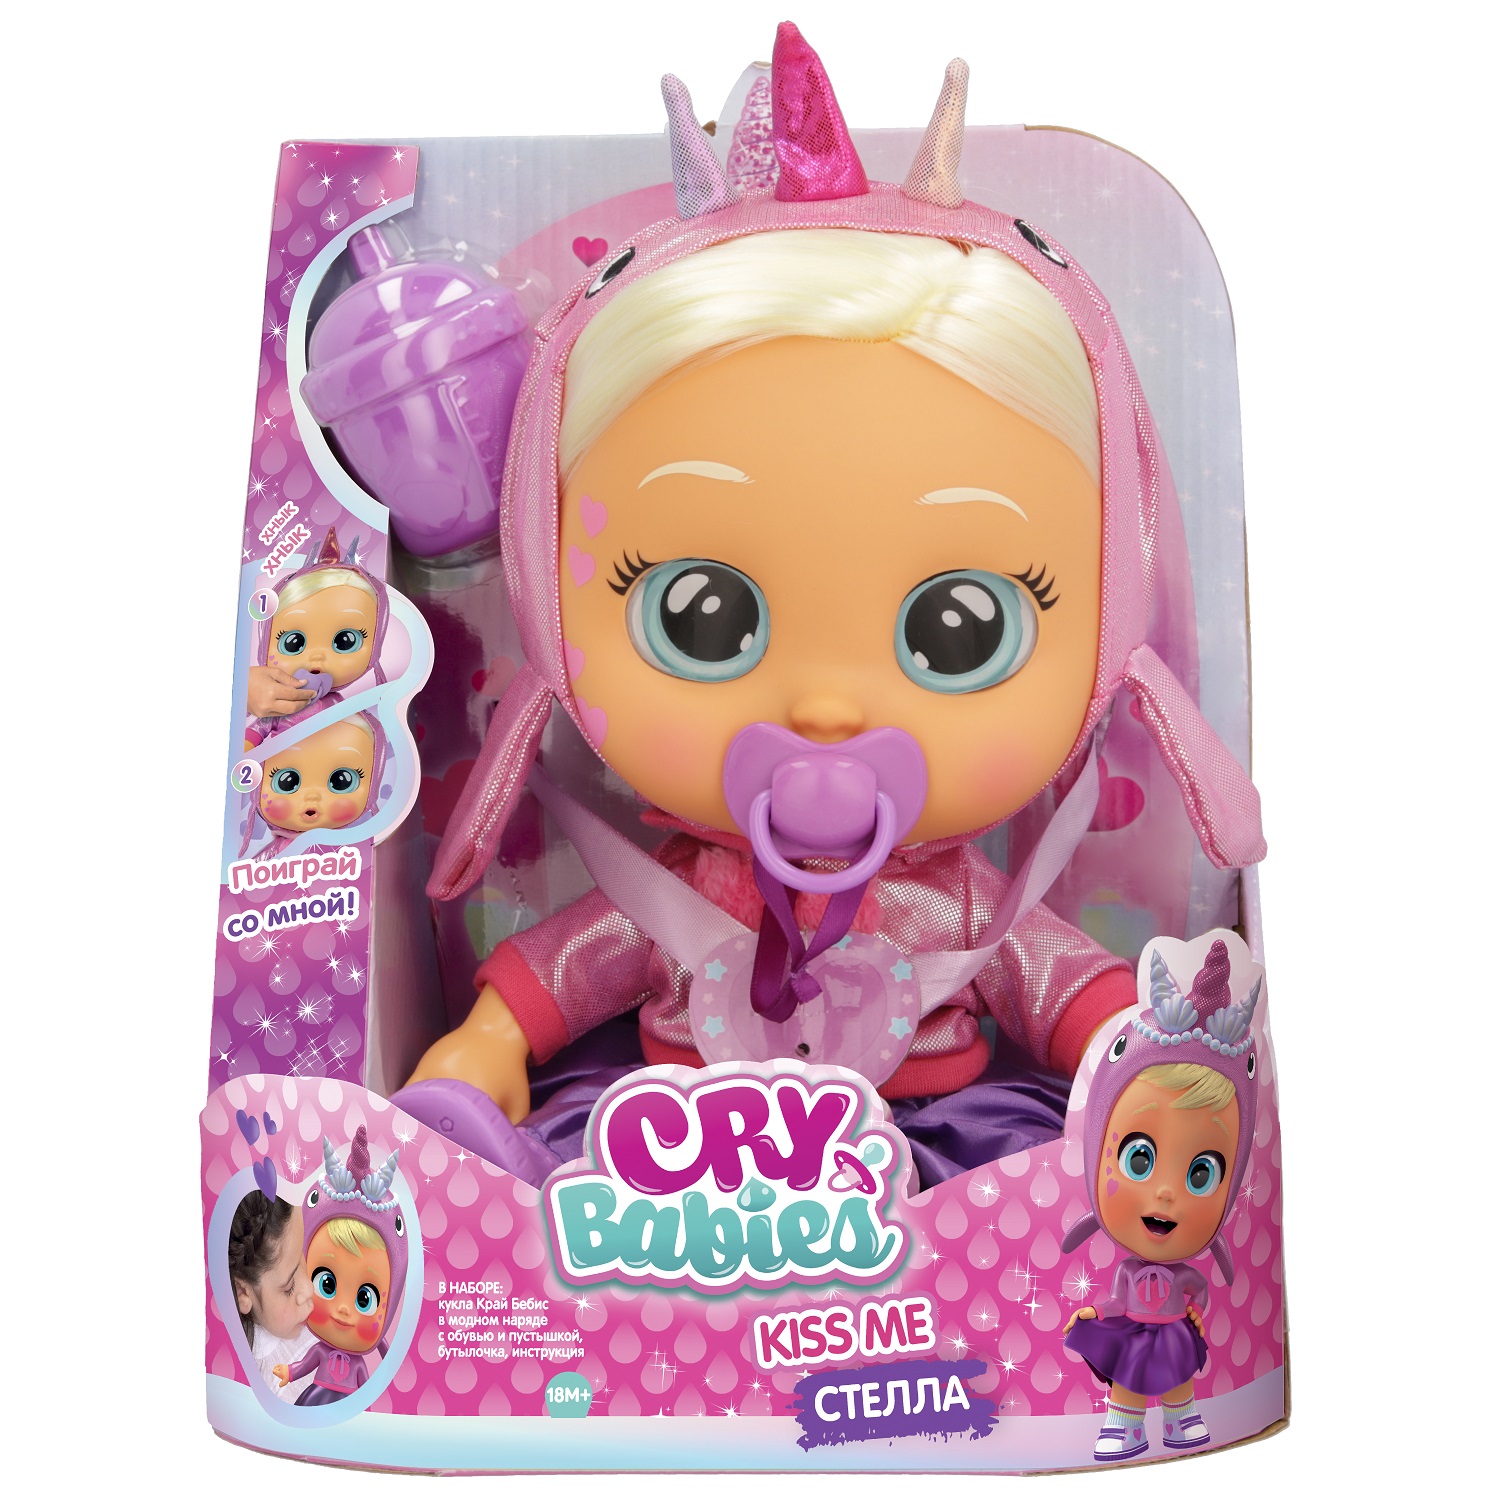 Кукла Cry Babies Стелла Поцелуй меня, интерактивная, плачущая, 40891